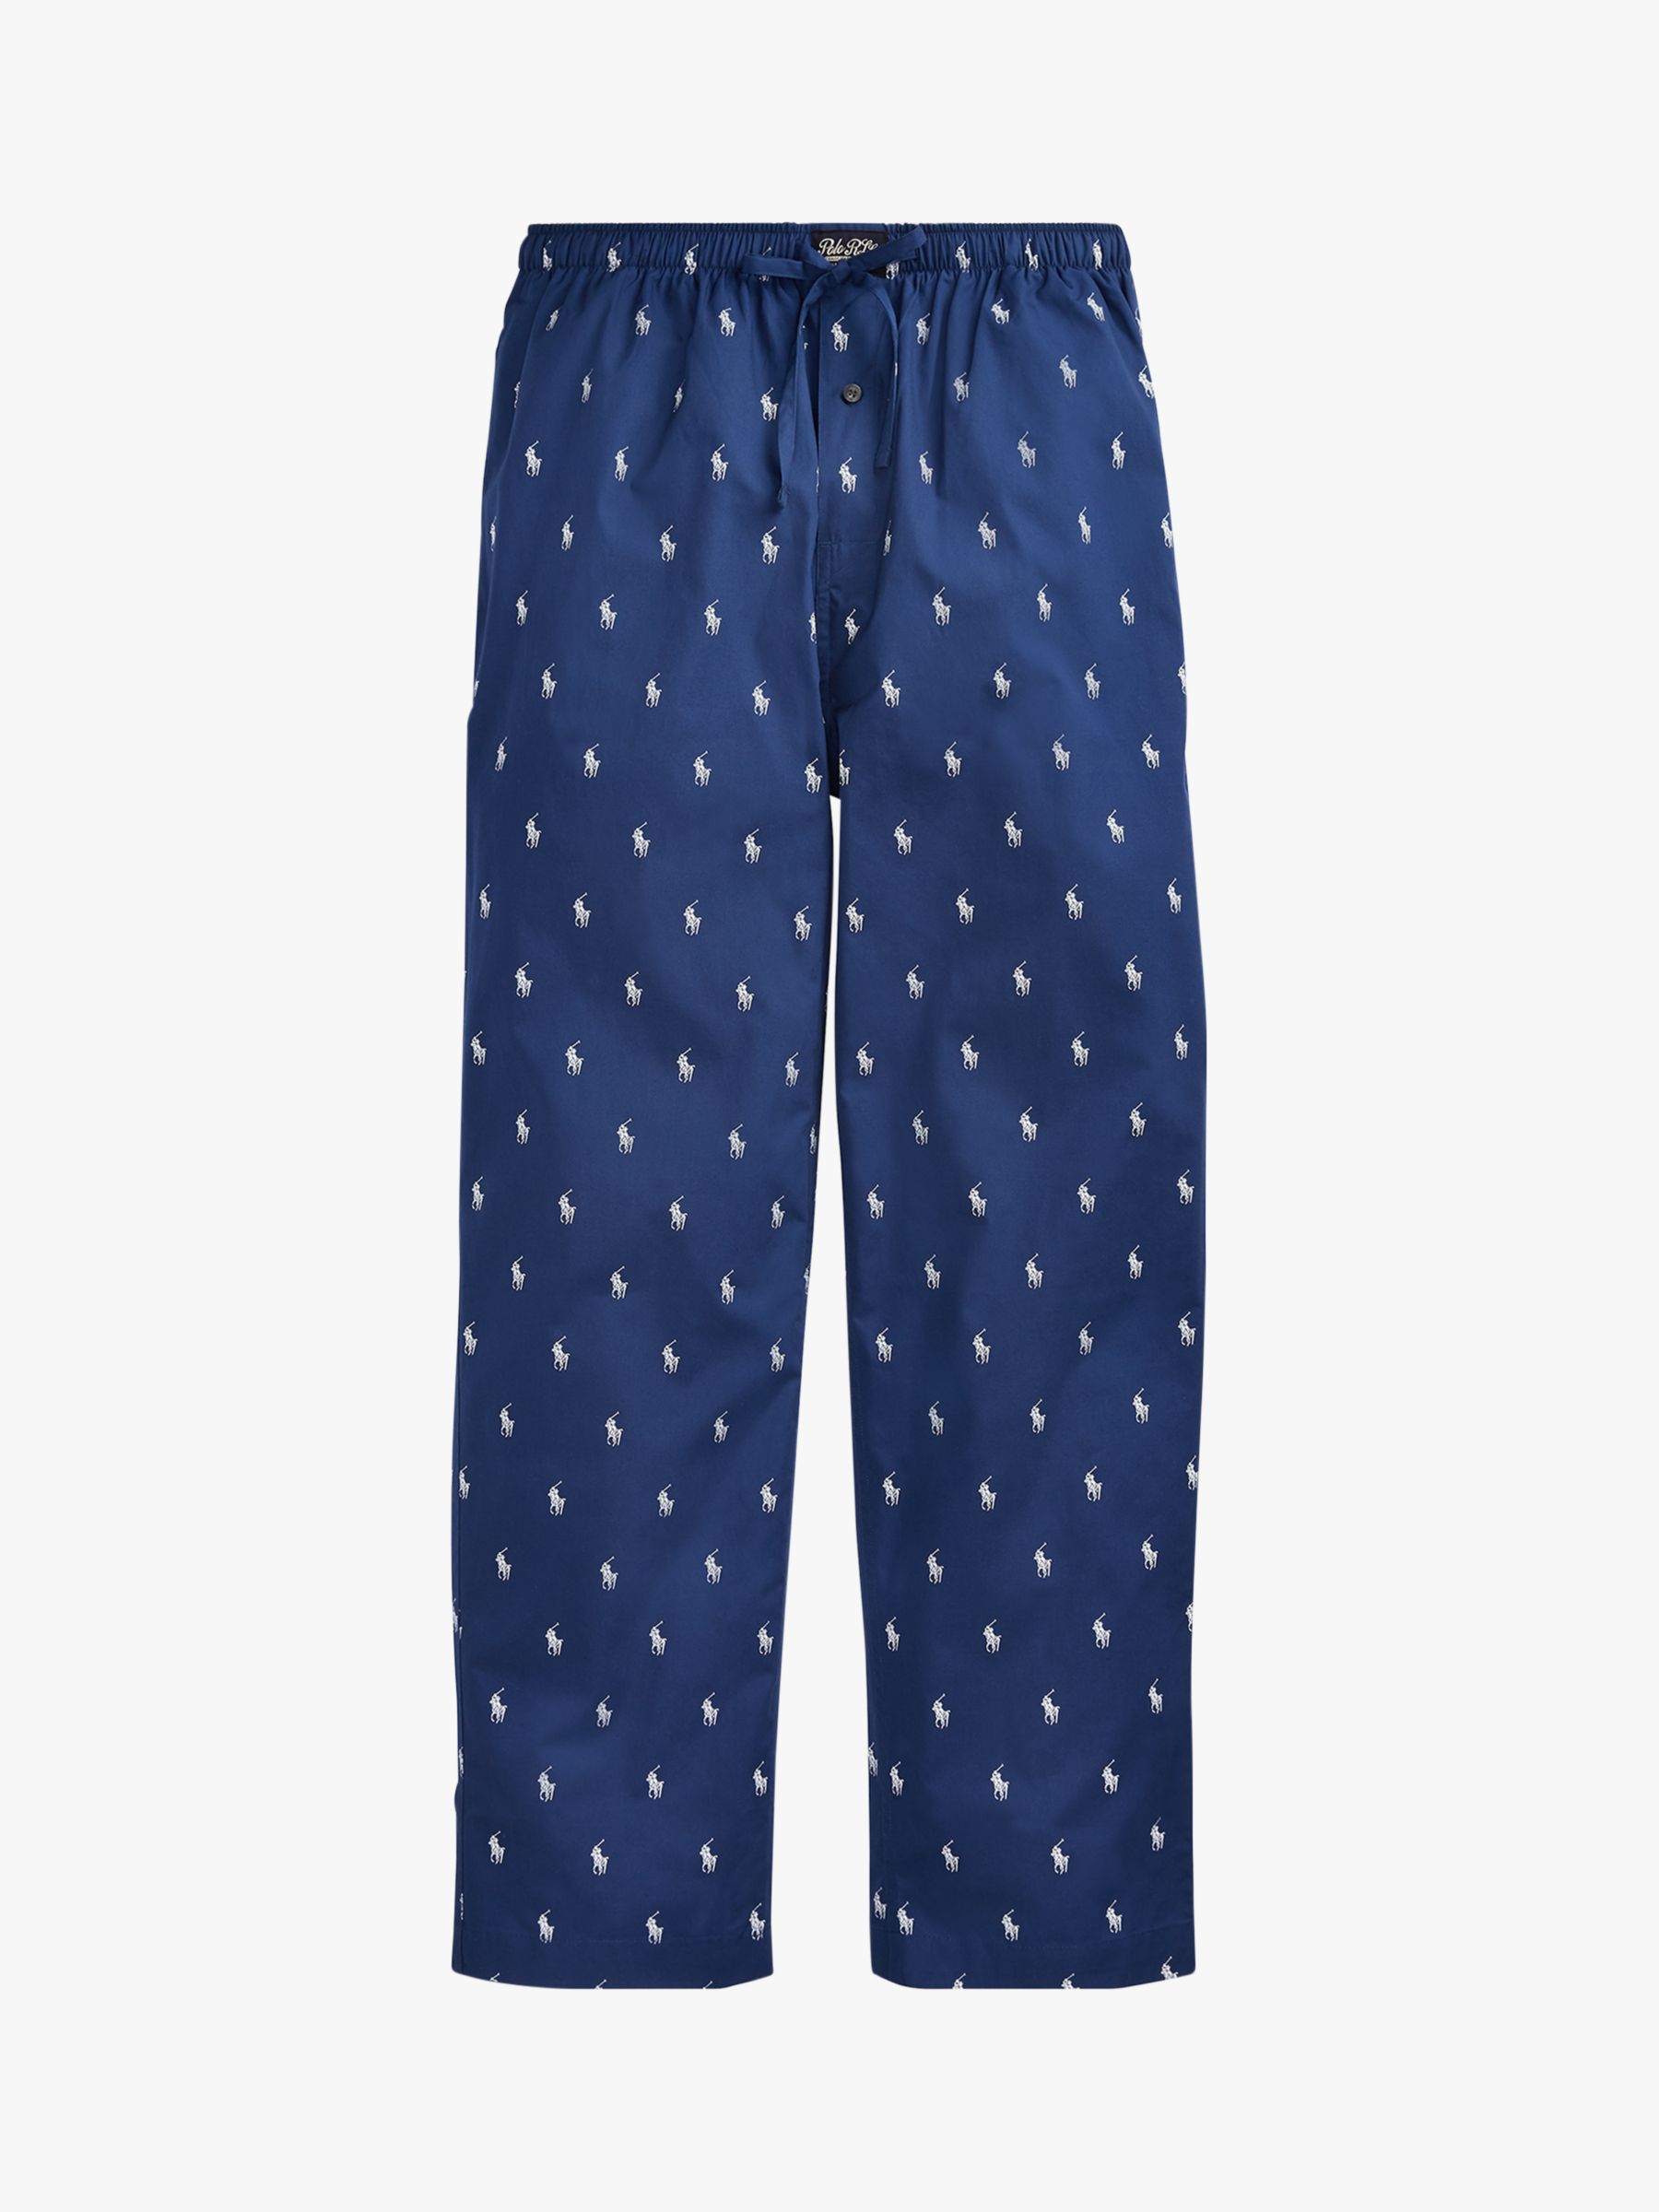 polo ralph lauren pyjama bottoms